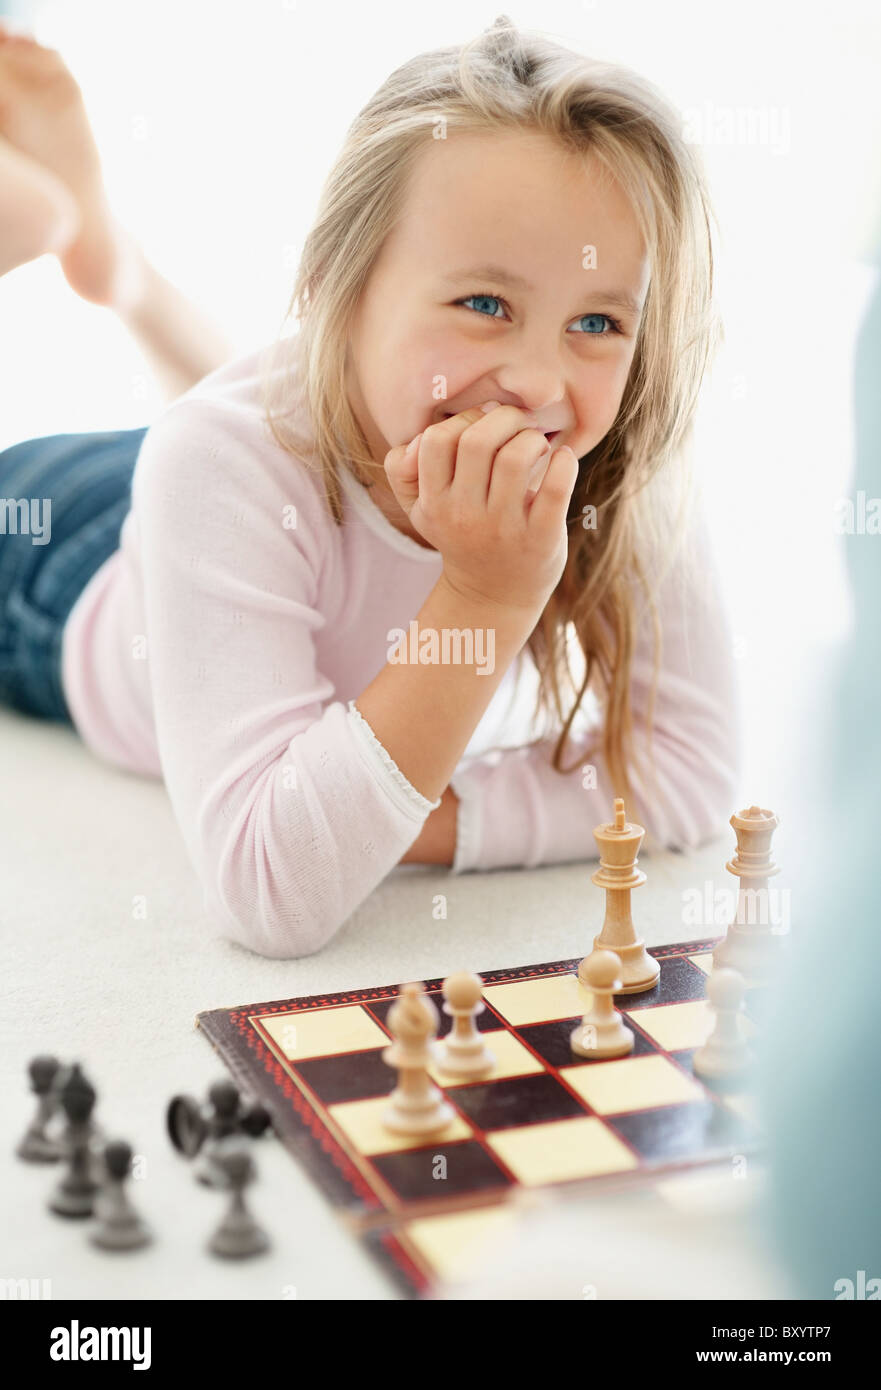 Girl playing chess Stock Photo